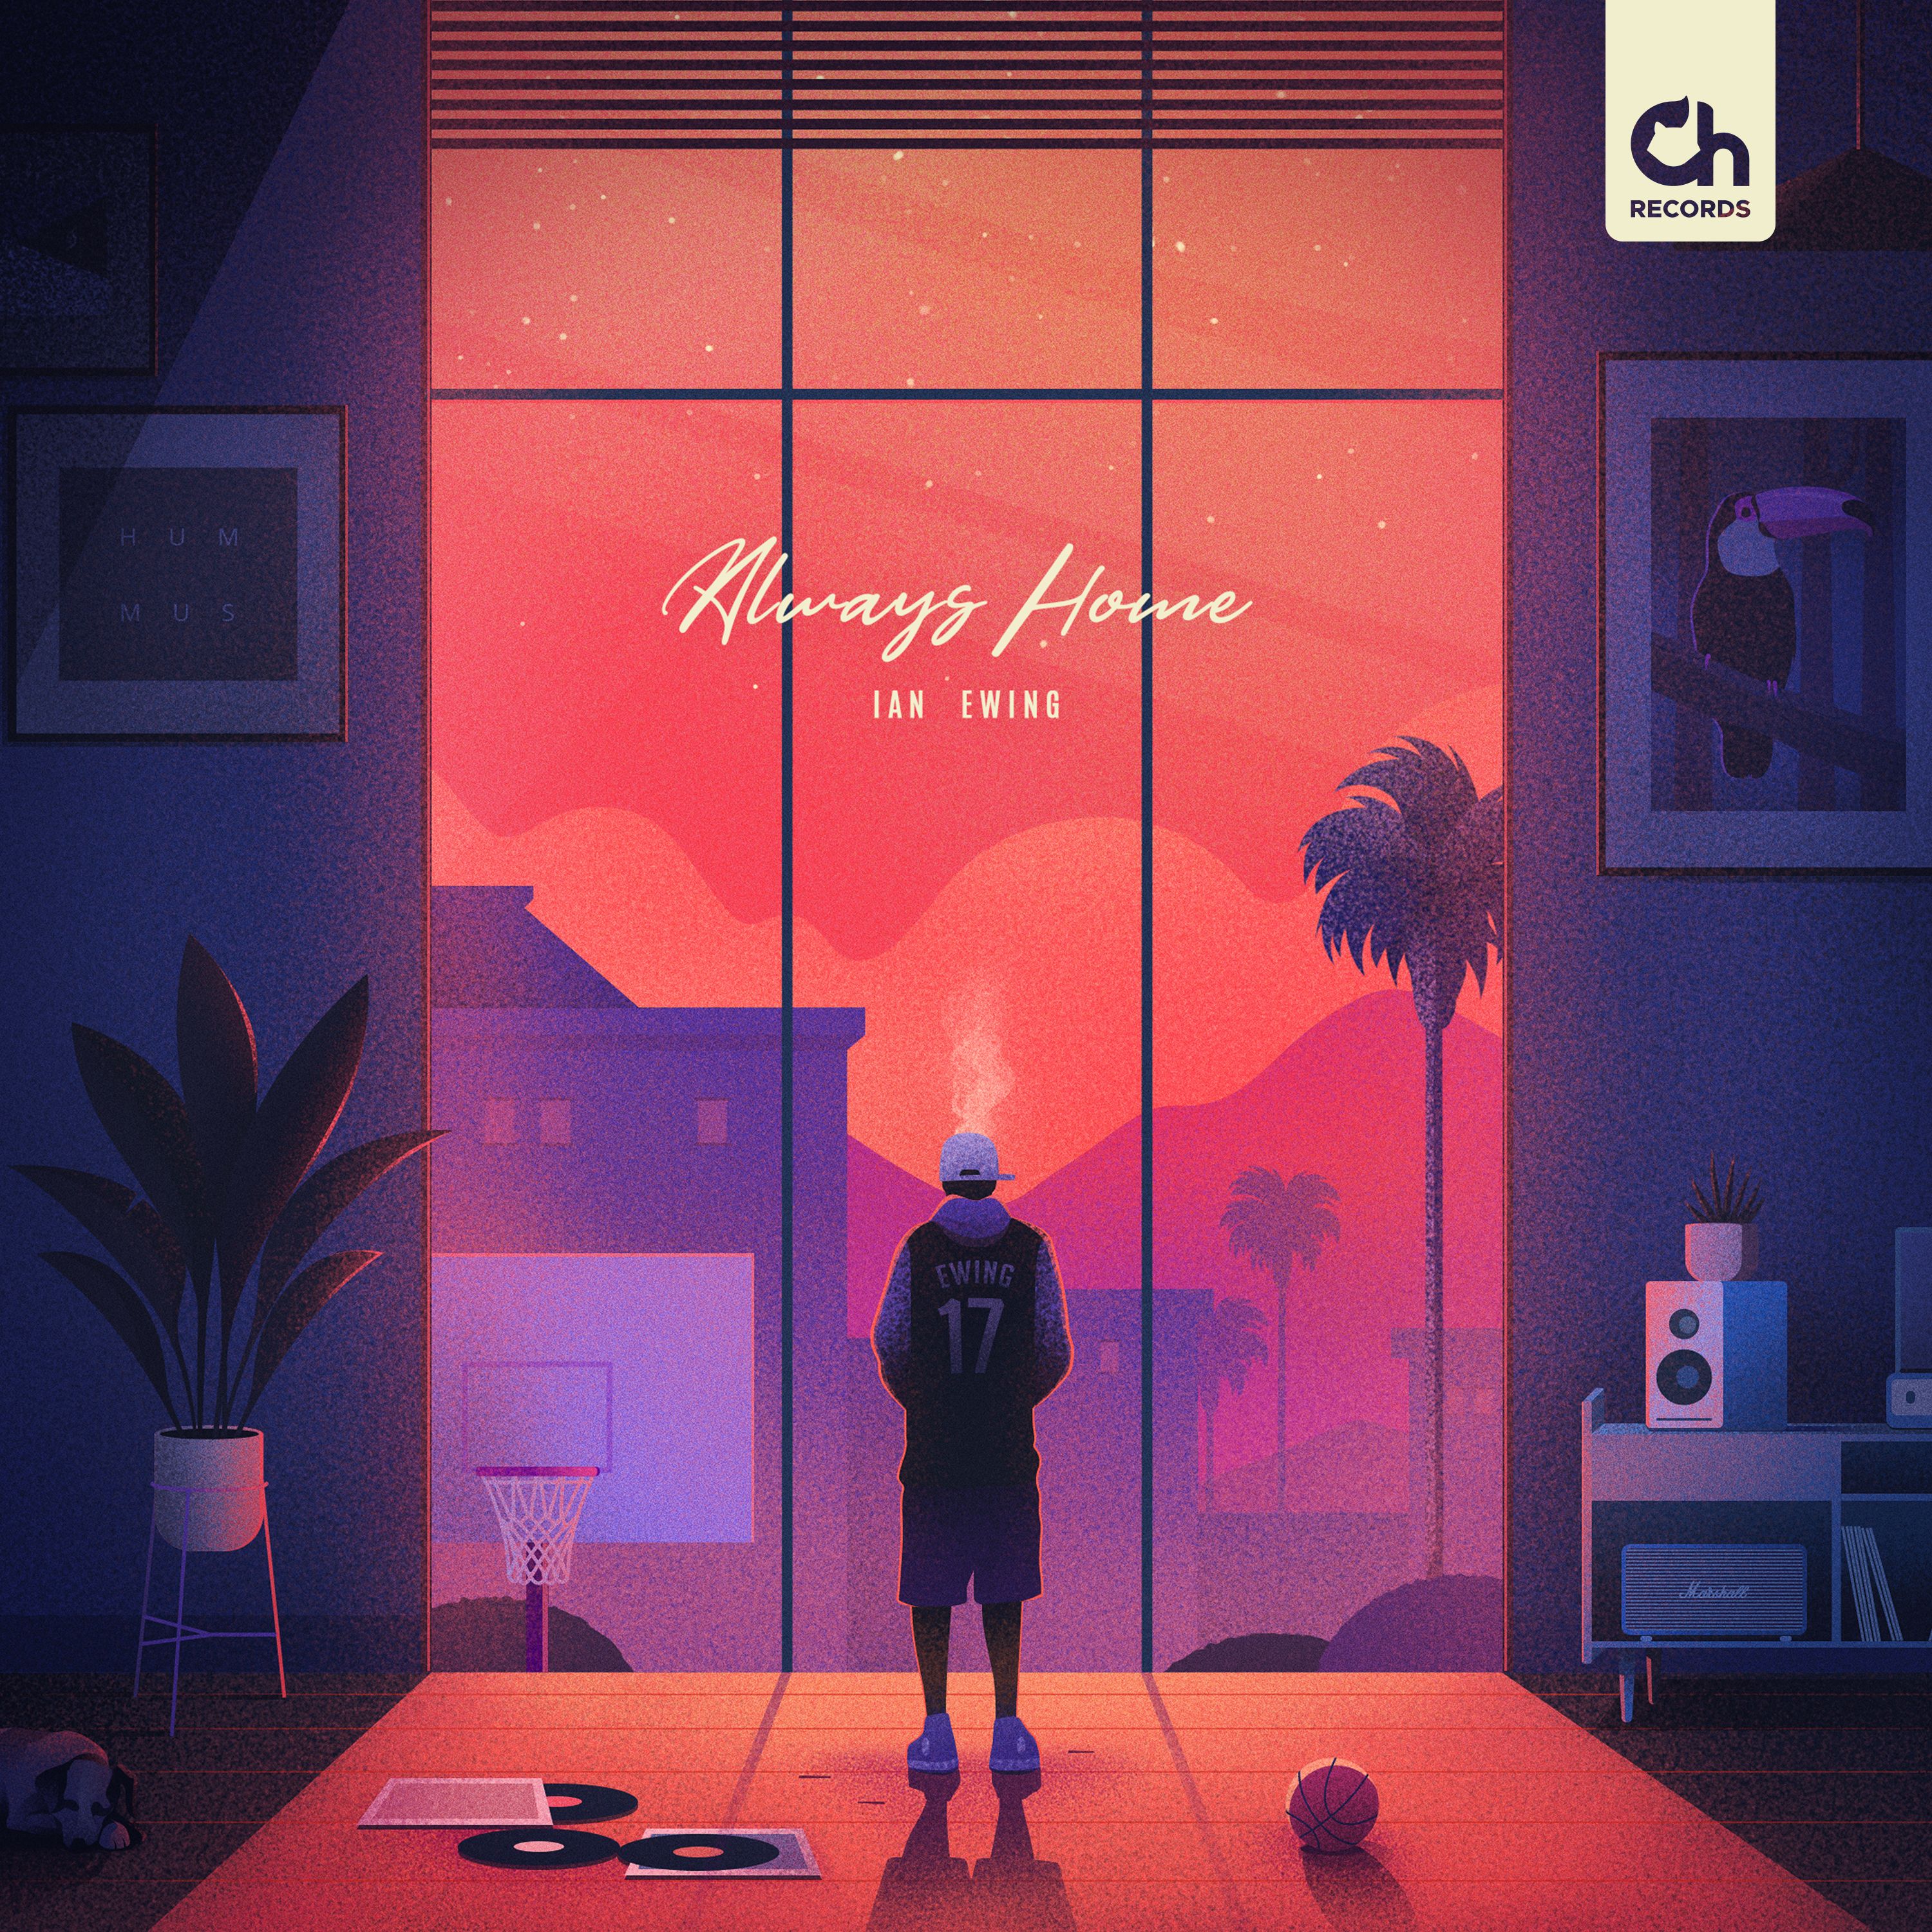 Prenesi Ian Ewing - 17 ["Always Home" EP out on 09.09]